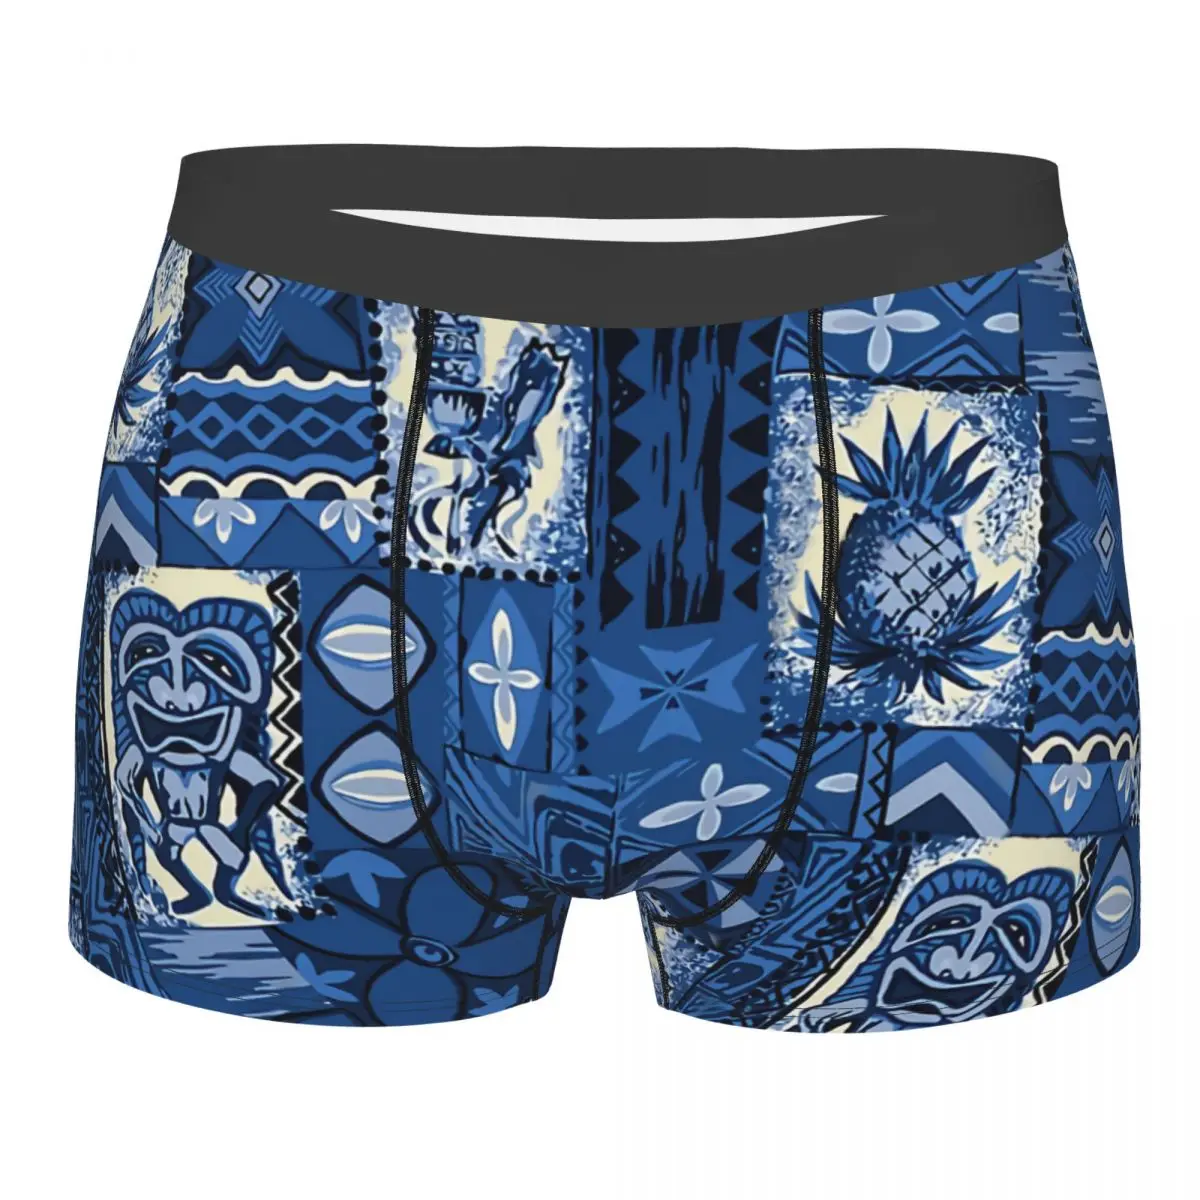 

Pomaikai Tiki Hawaiian Vintage Tapa Indigo Man's Boxer Briefs Underwear Highly Breathable Top Quality Sexy Shorts Gift Idea